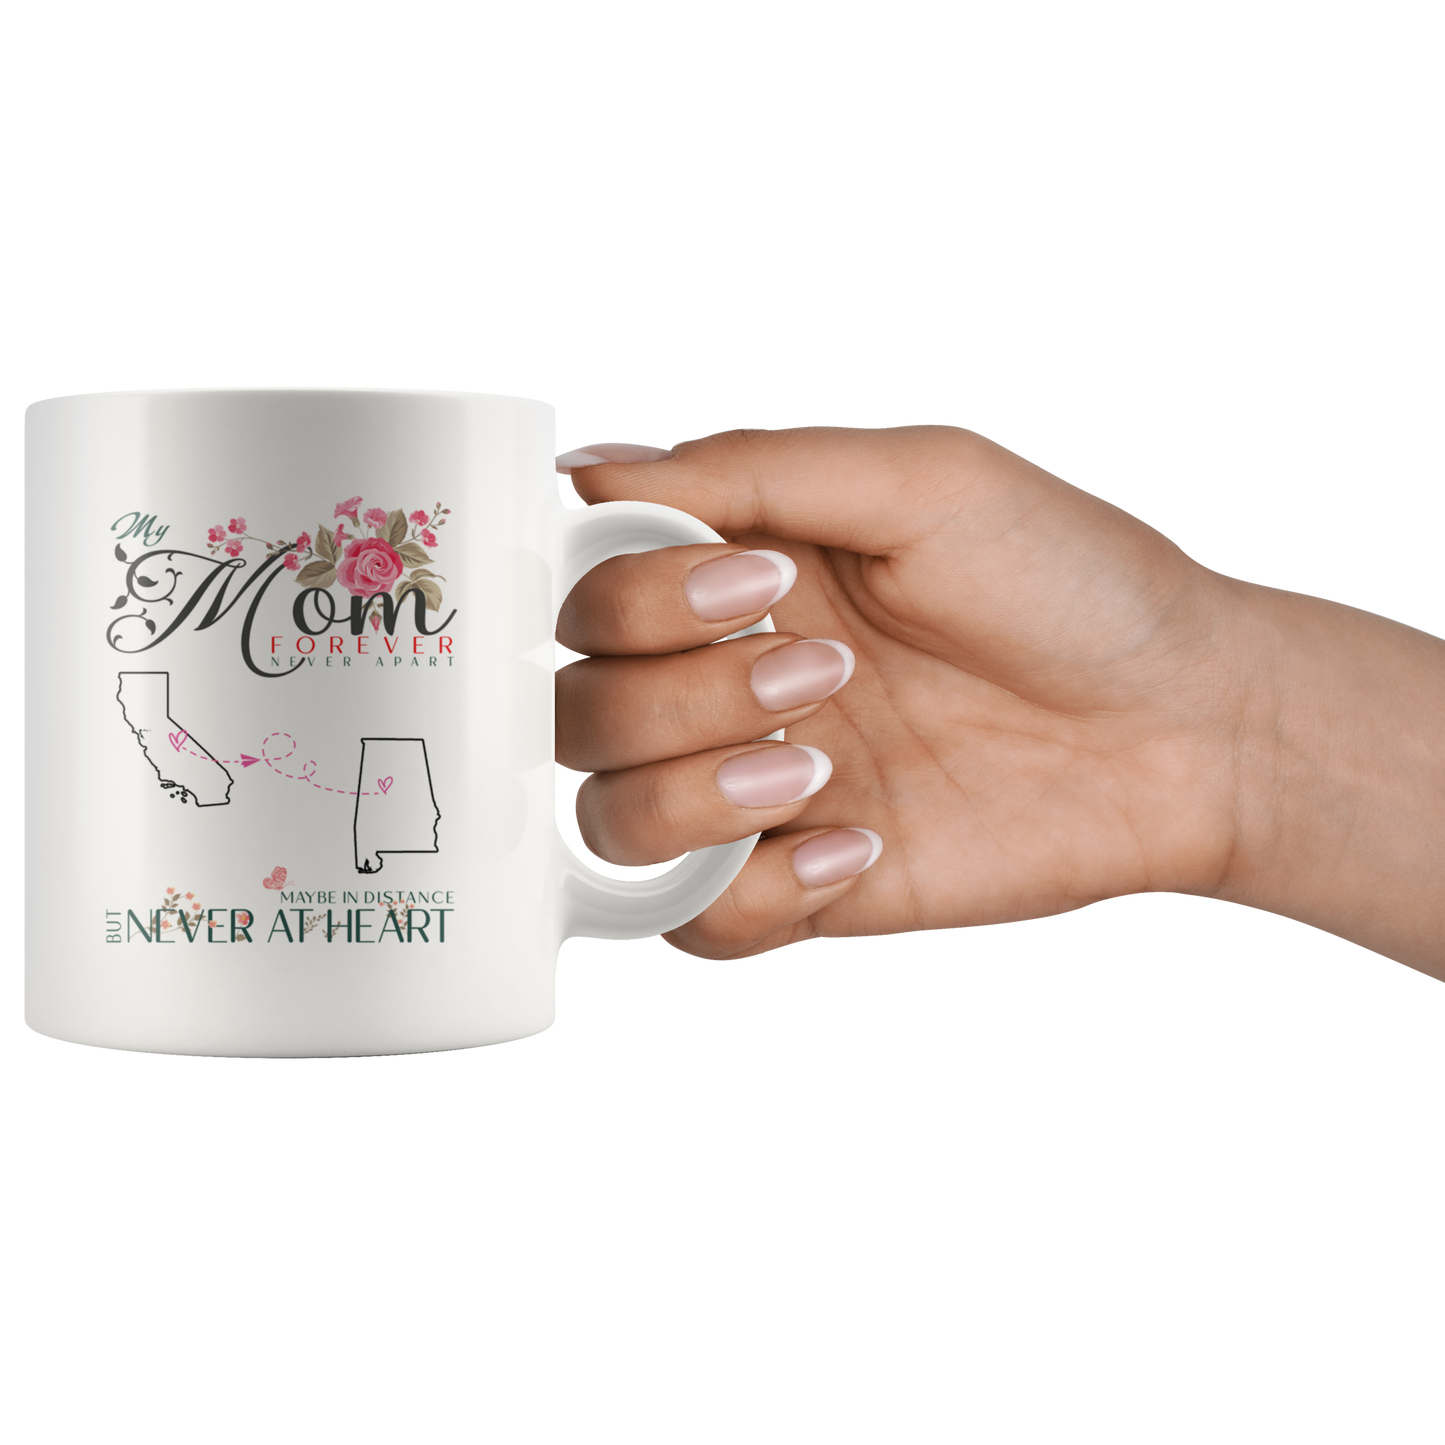 M-20447122-sp-16737 - Mothers Day Gifts Coffee Mug Distance California Alabama My